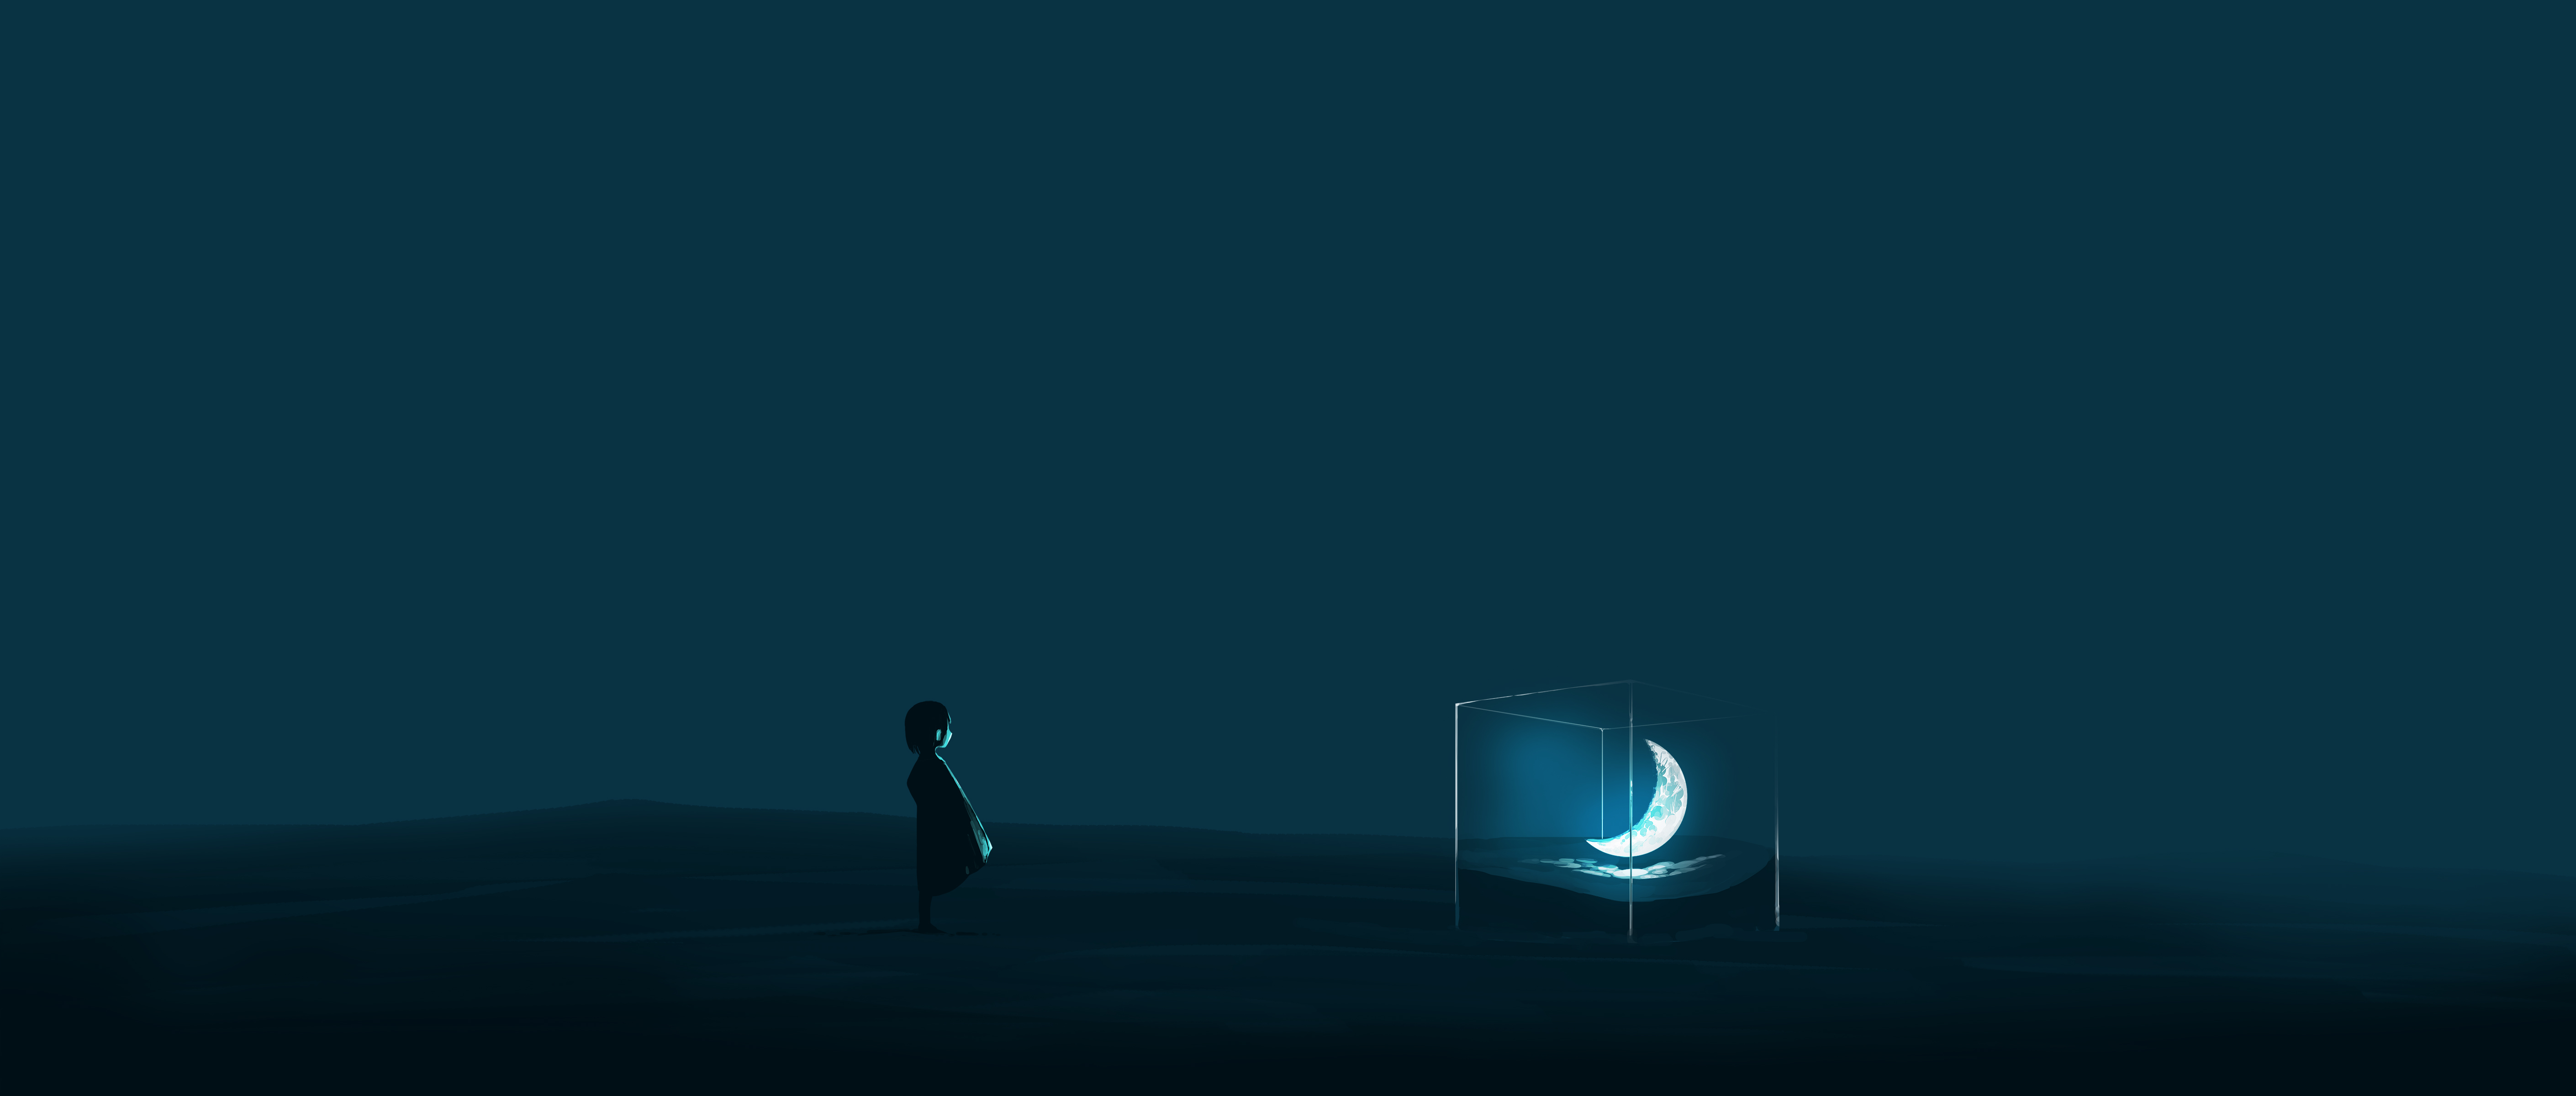 Gracile Digital Art Artwork Illustration Minimalism Moon Abstract Wide Screen Landscape Crescent Moo 5640x2400